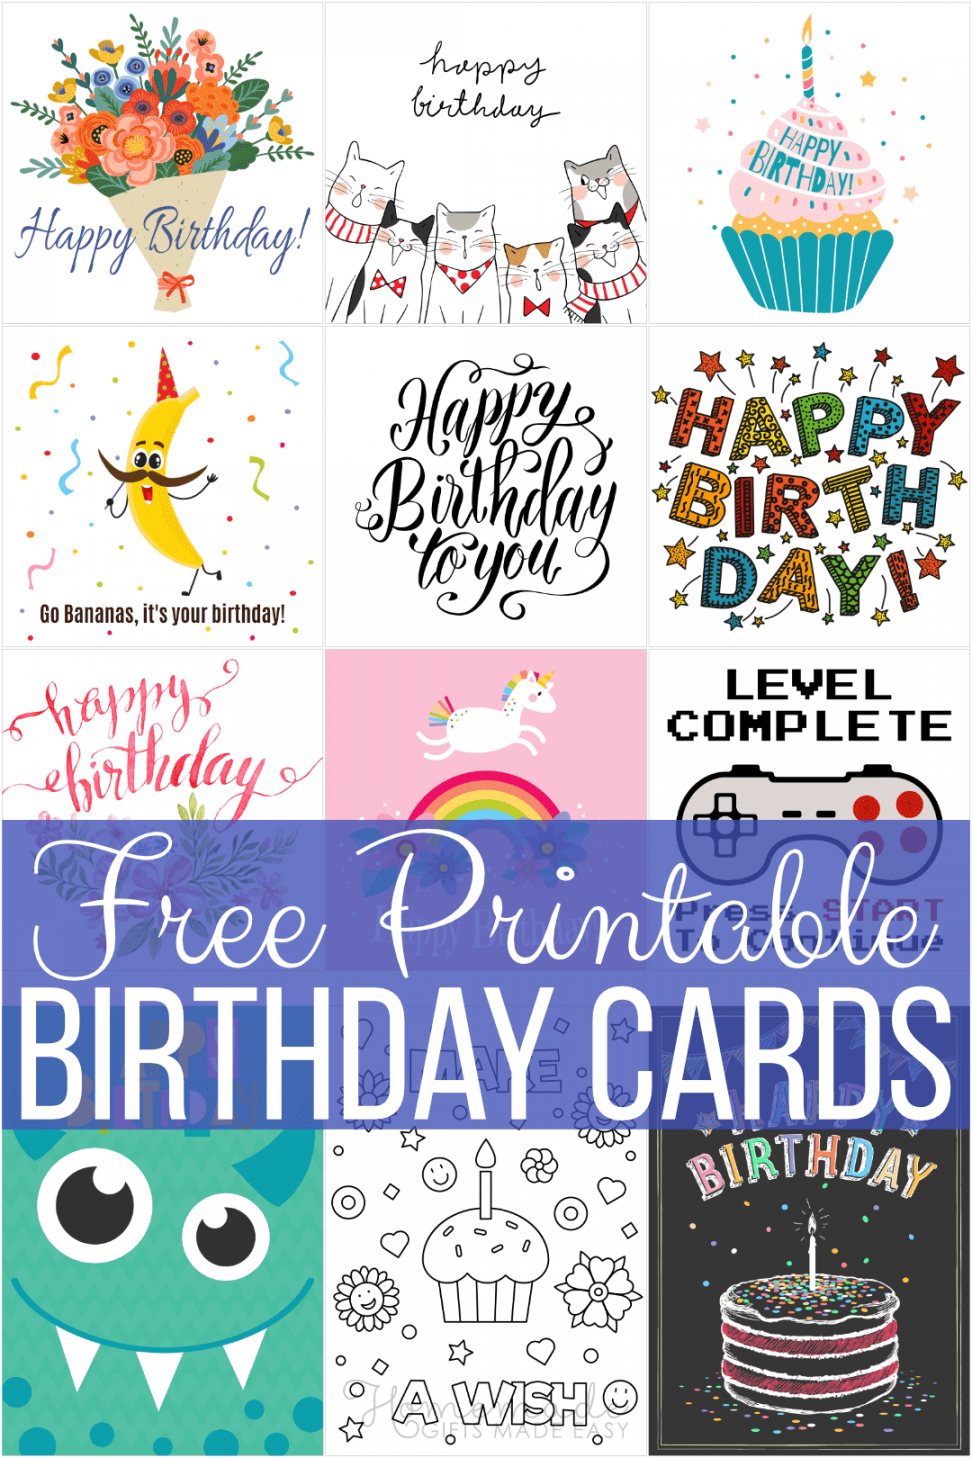 Happy Birthday Free Printable - Printable - Free Printable Birthday Cards for Everyone